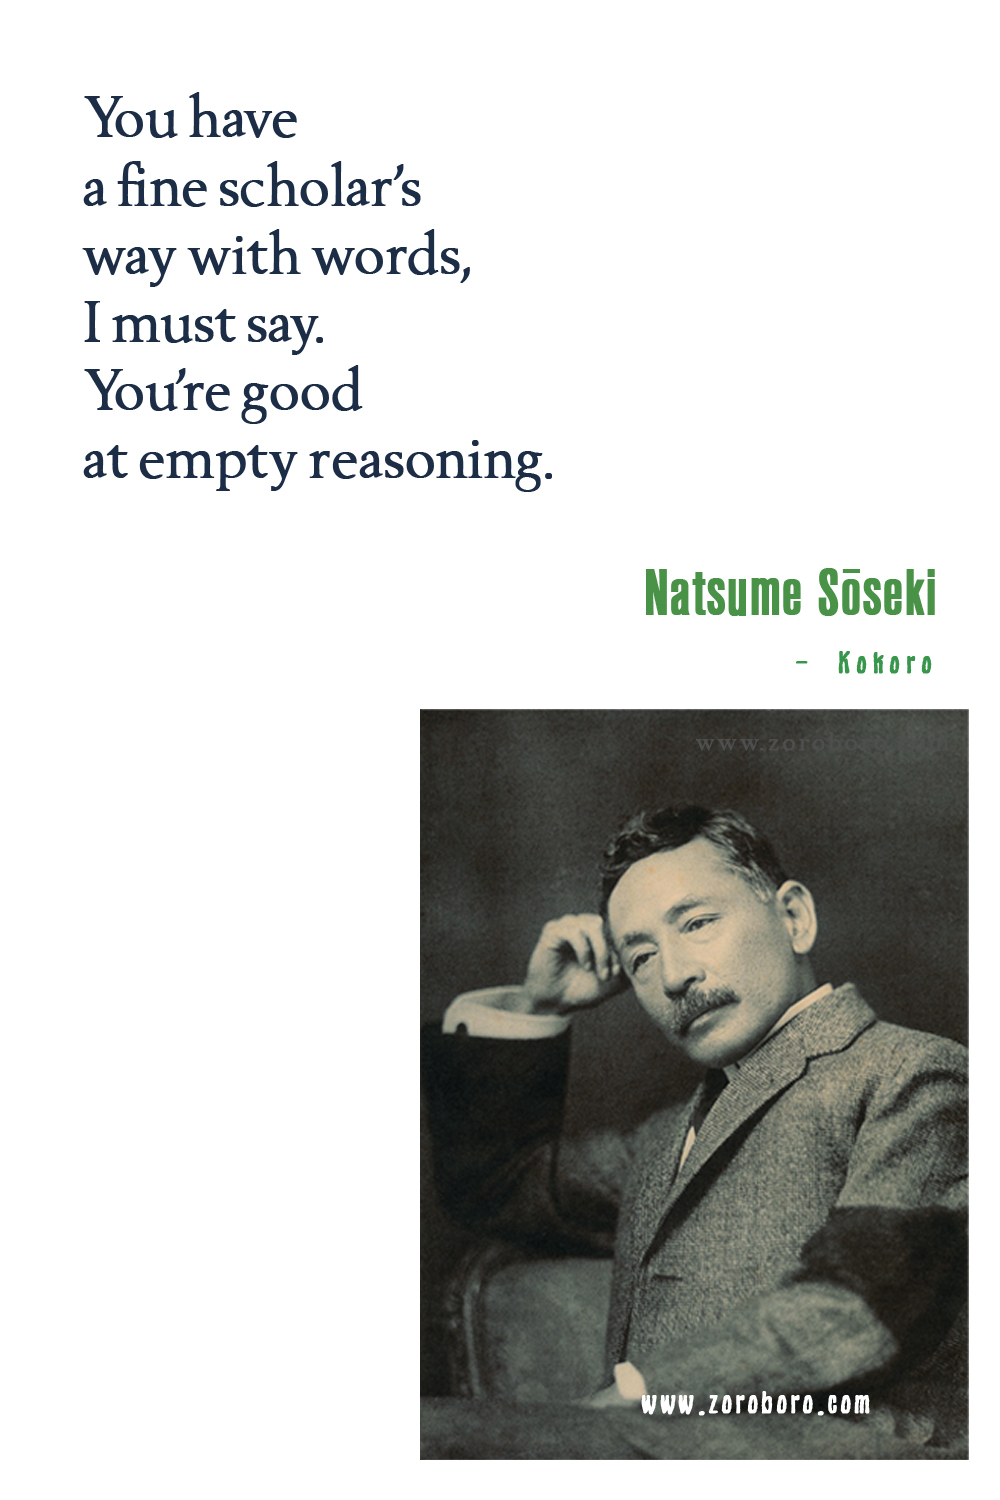 Natsume Sōseki Quotes, Natsume Sōseki Kokoro, I Am a Cat Quotes, Natsume Sōseki Books Quotes, Natsume Soseki Poems Quotes.